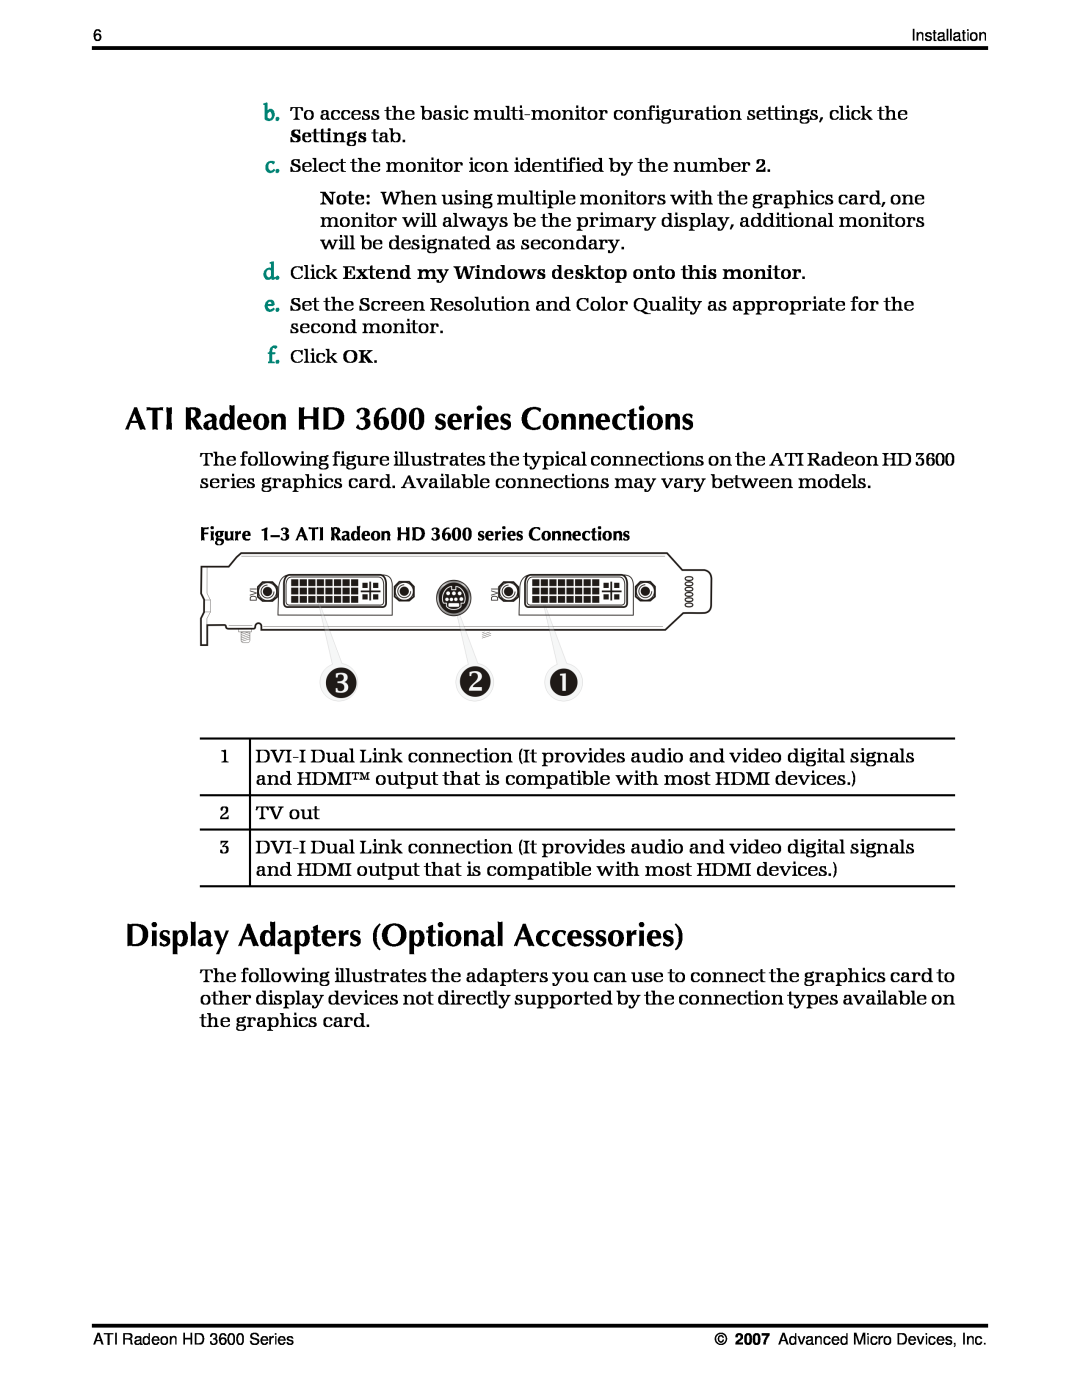 AMD 3600 manual Installation, Advanced Micro Devices, Inc 